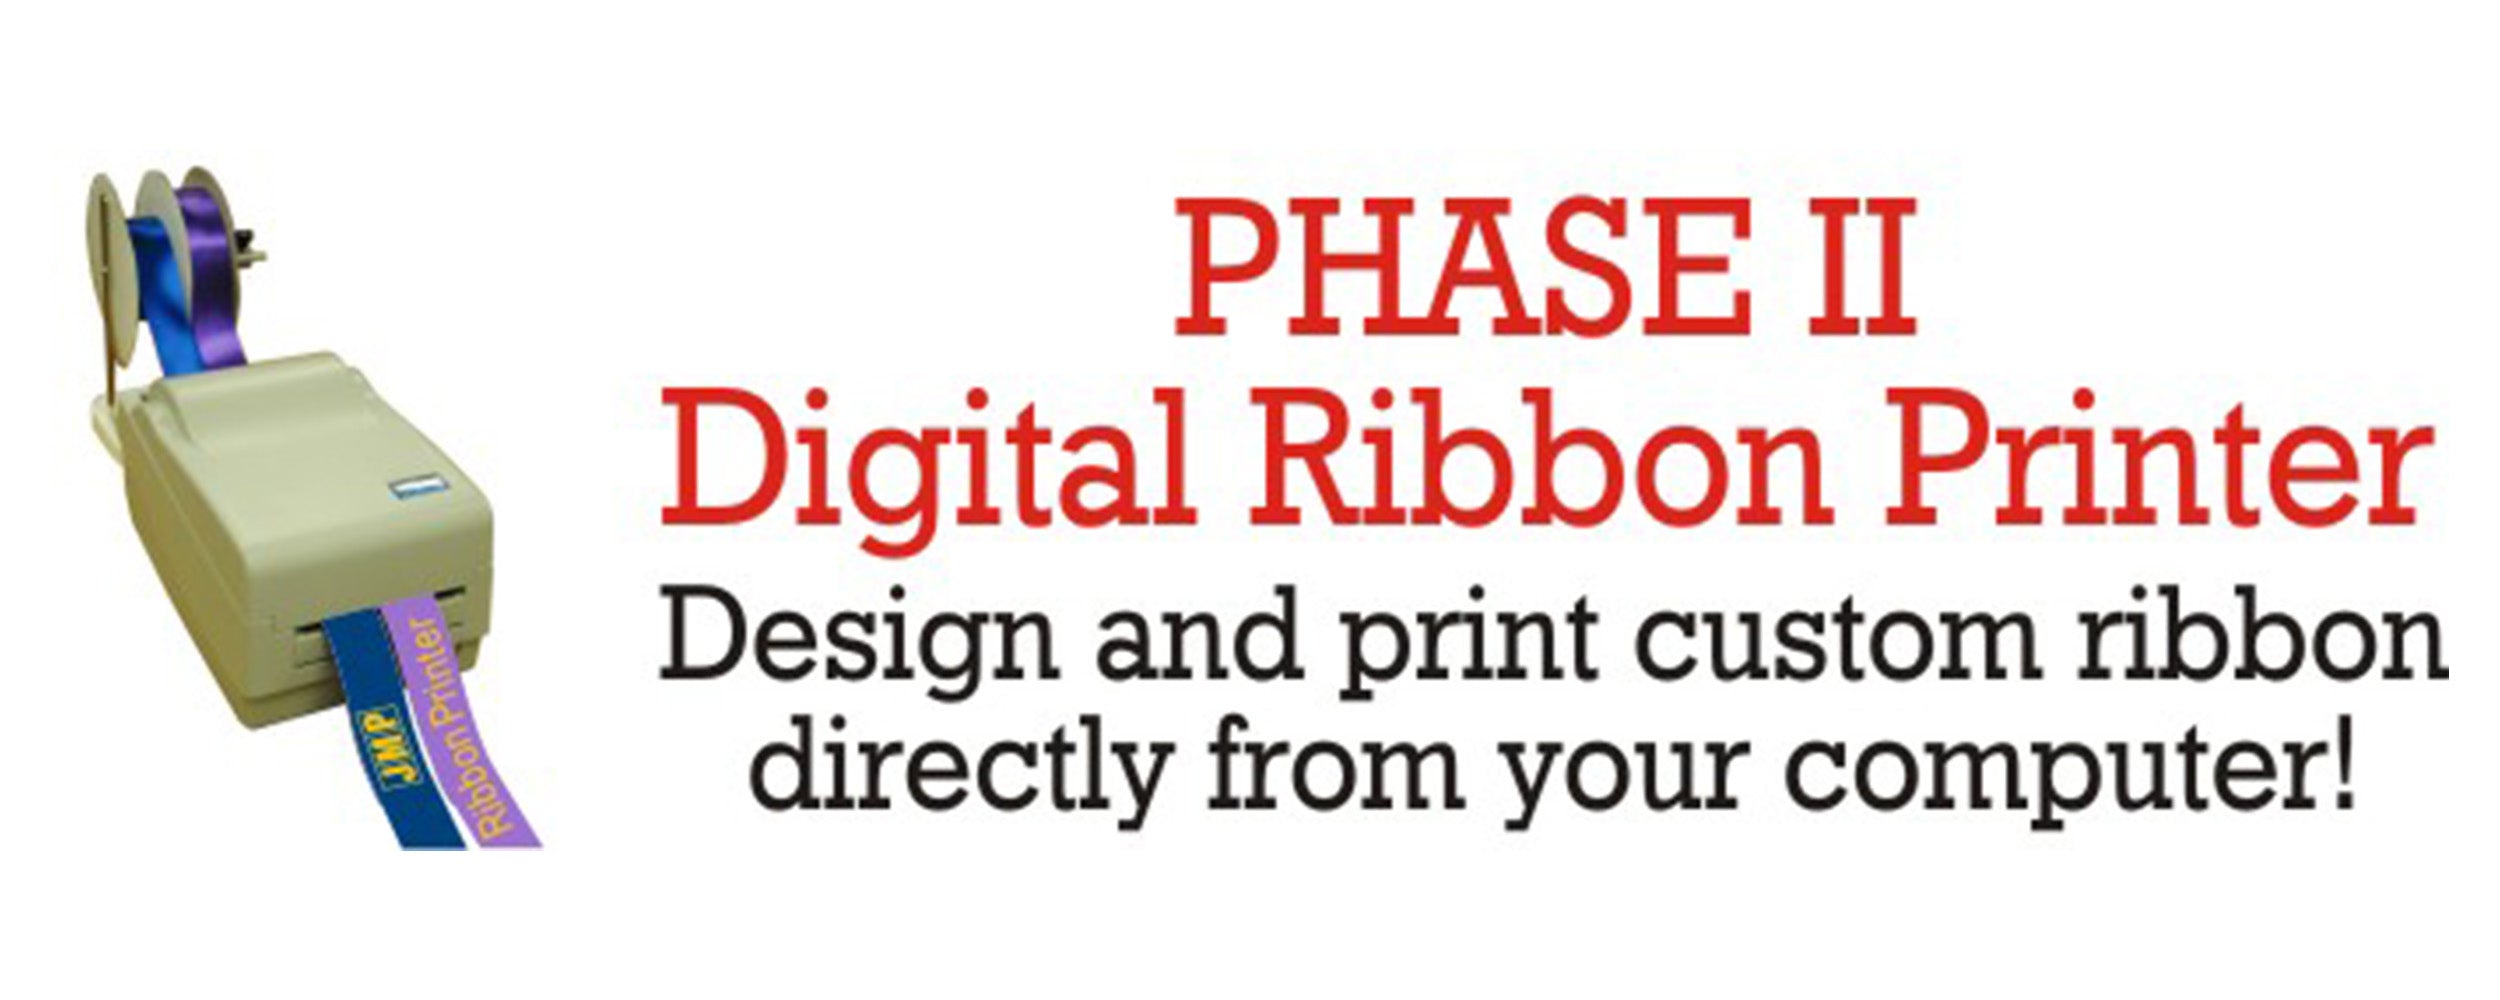 Phase II Digital Ribbon Printer